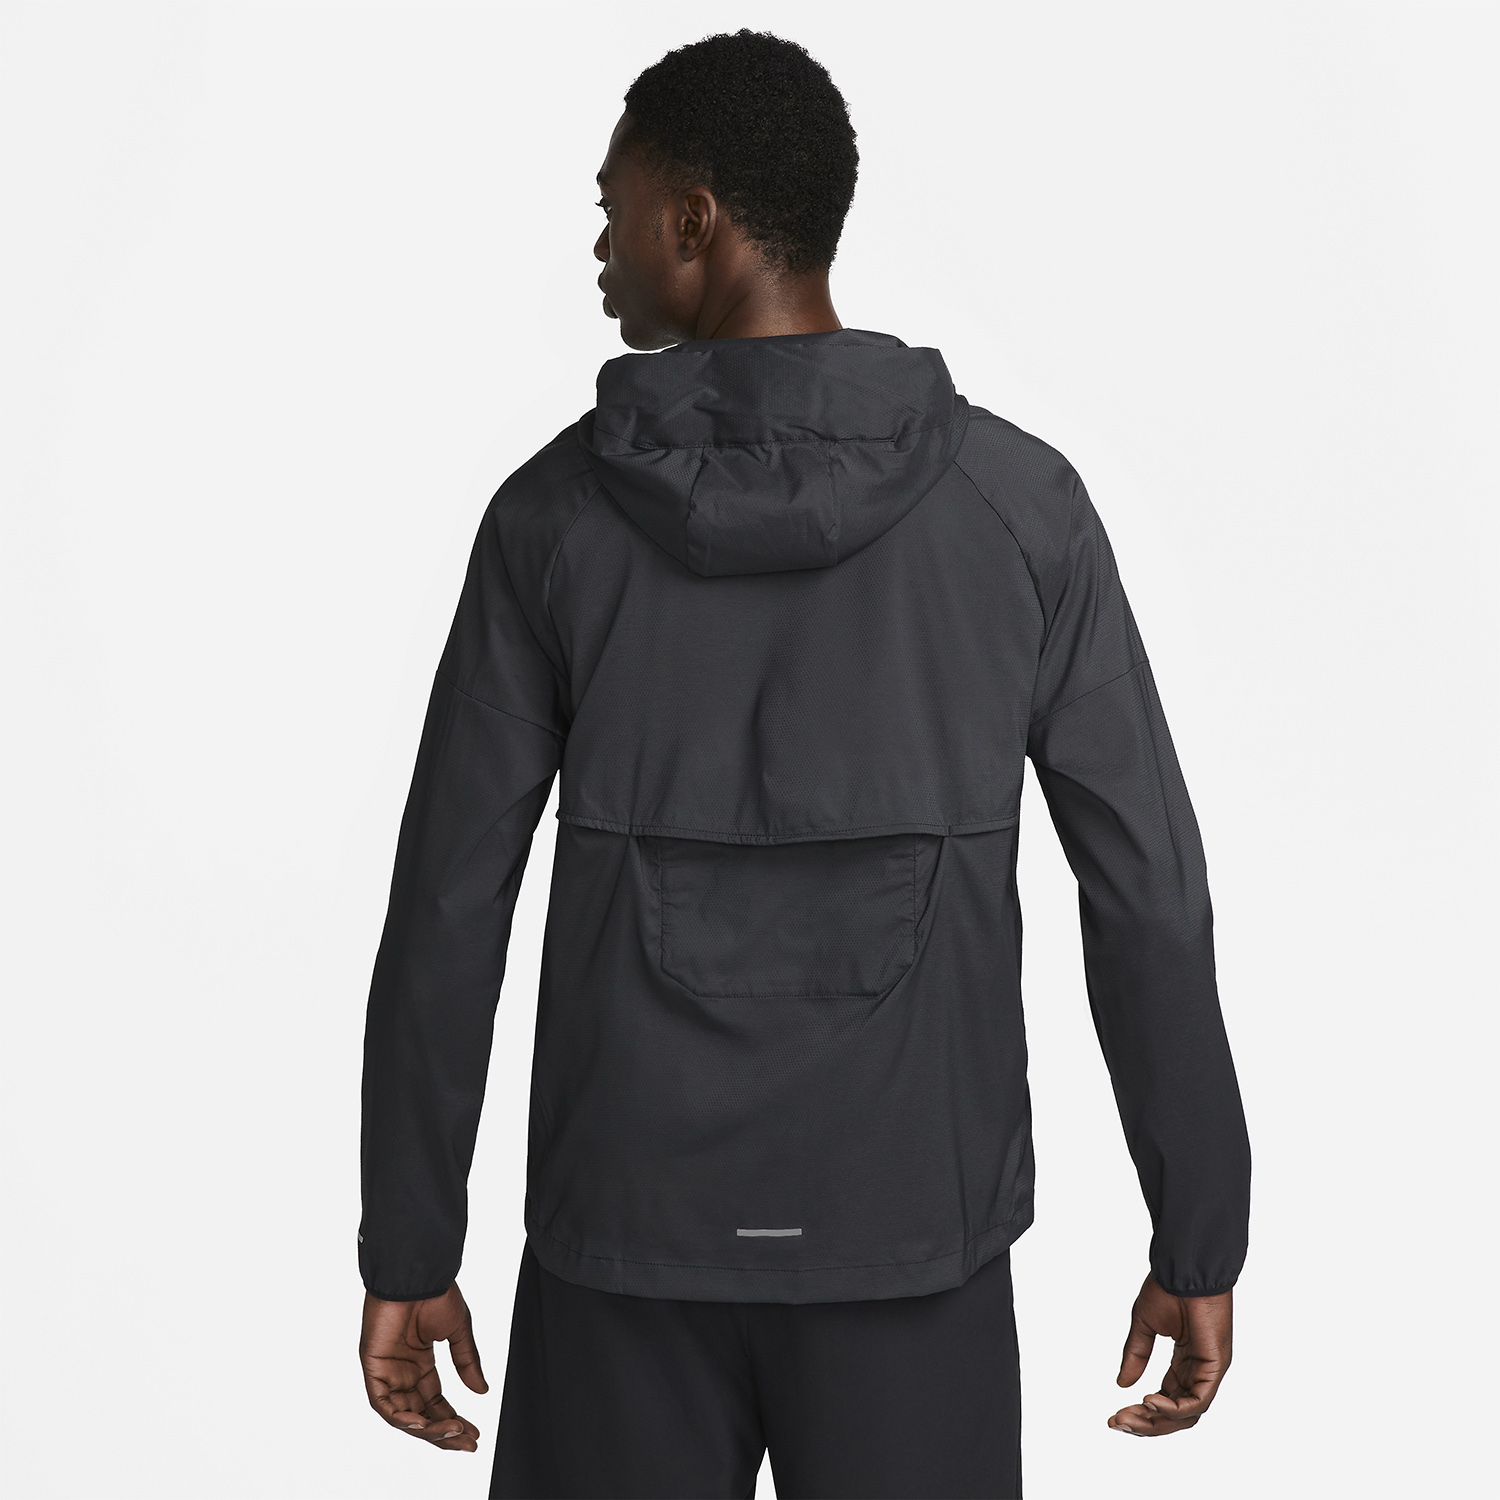 Nike Windrunner Men's Running Jacket - Black/Reflective Silver